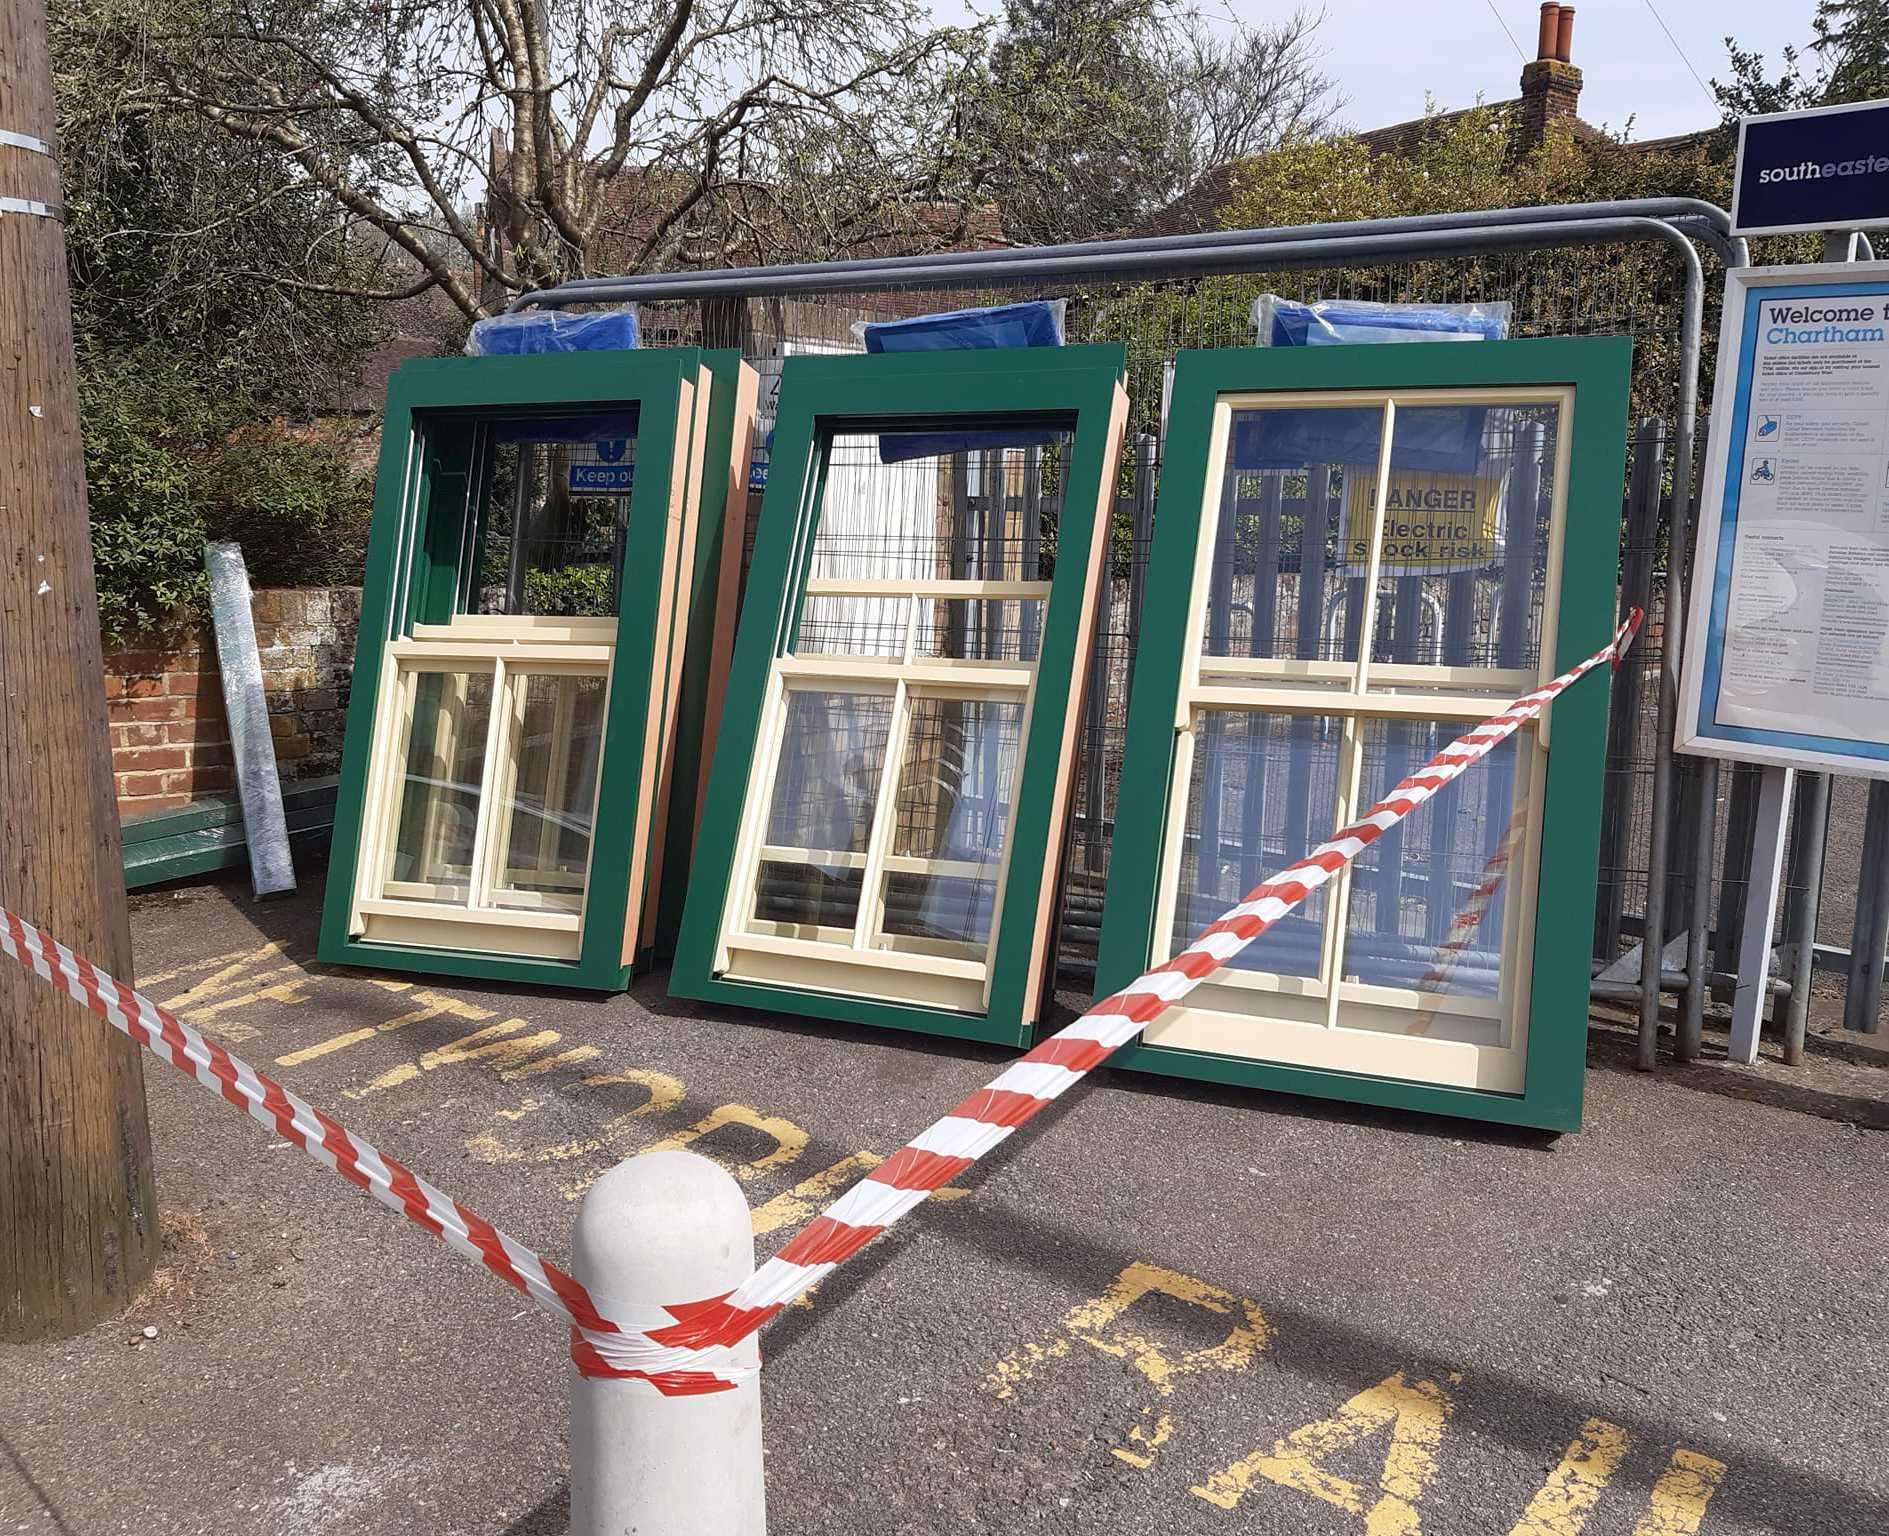 The restored windows of Chartham signal box